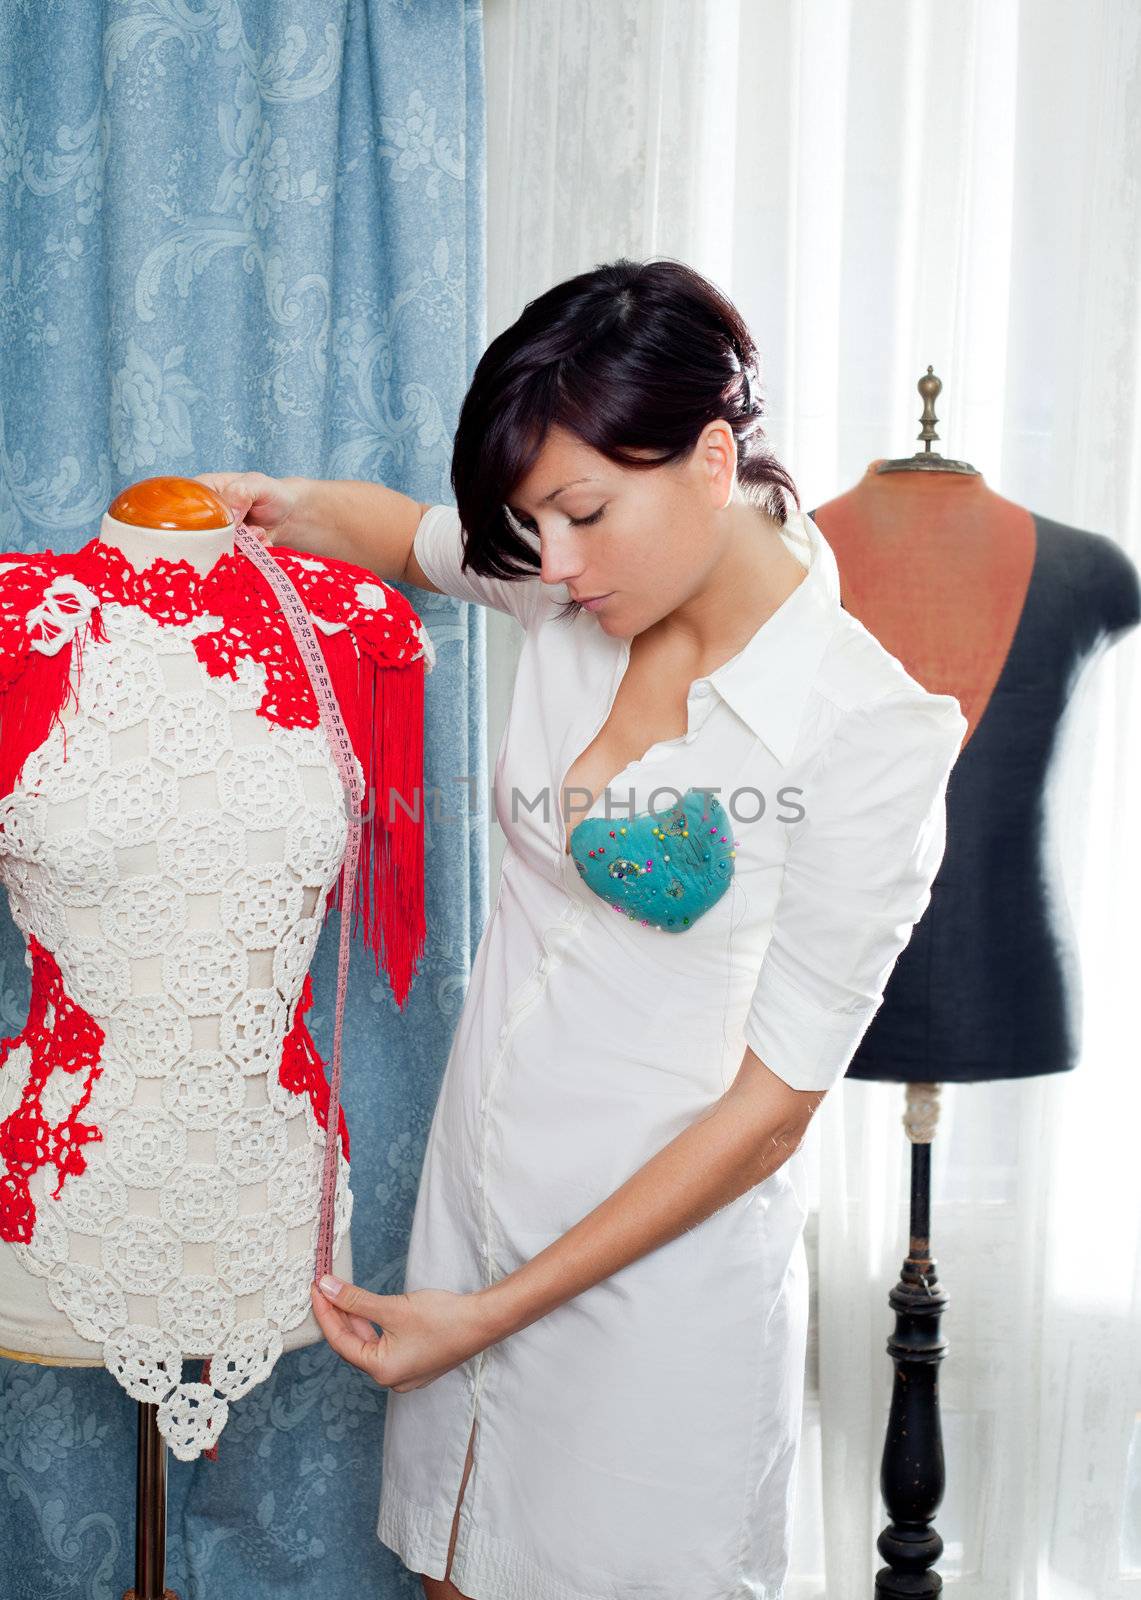 Dressmaker with mannequin as professional fashion designer